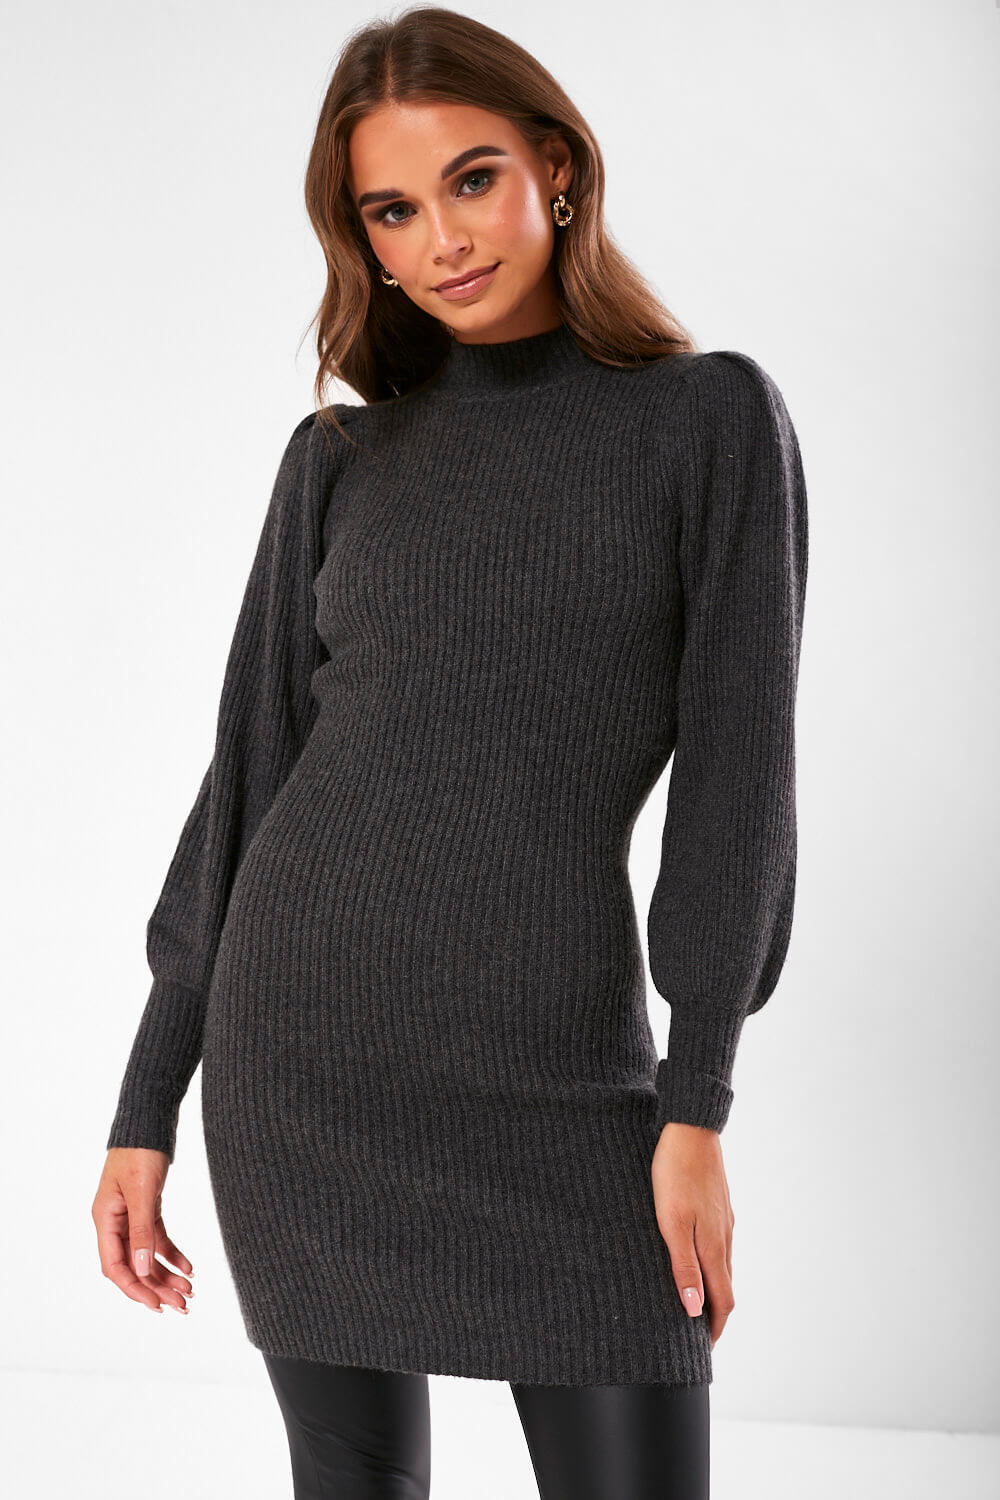 Only Katia Long Sleeve Knit Dress in Dark Grey | iCLOTHING - iCLOTHING